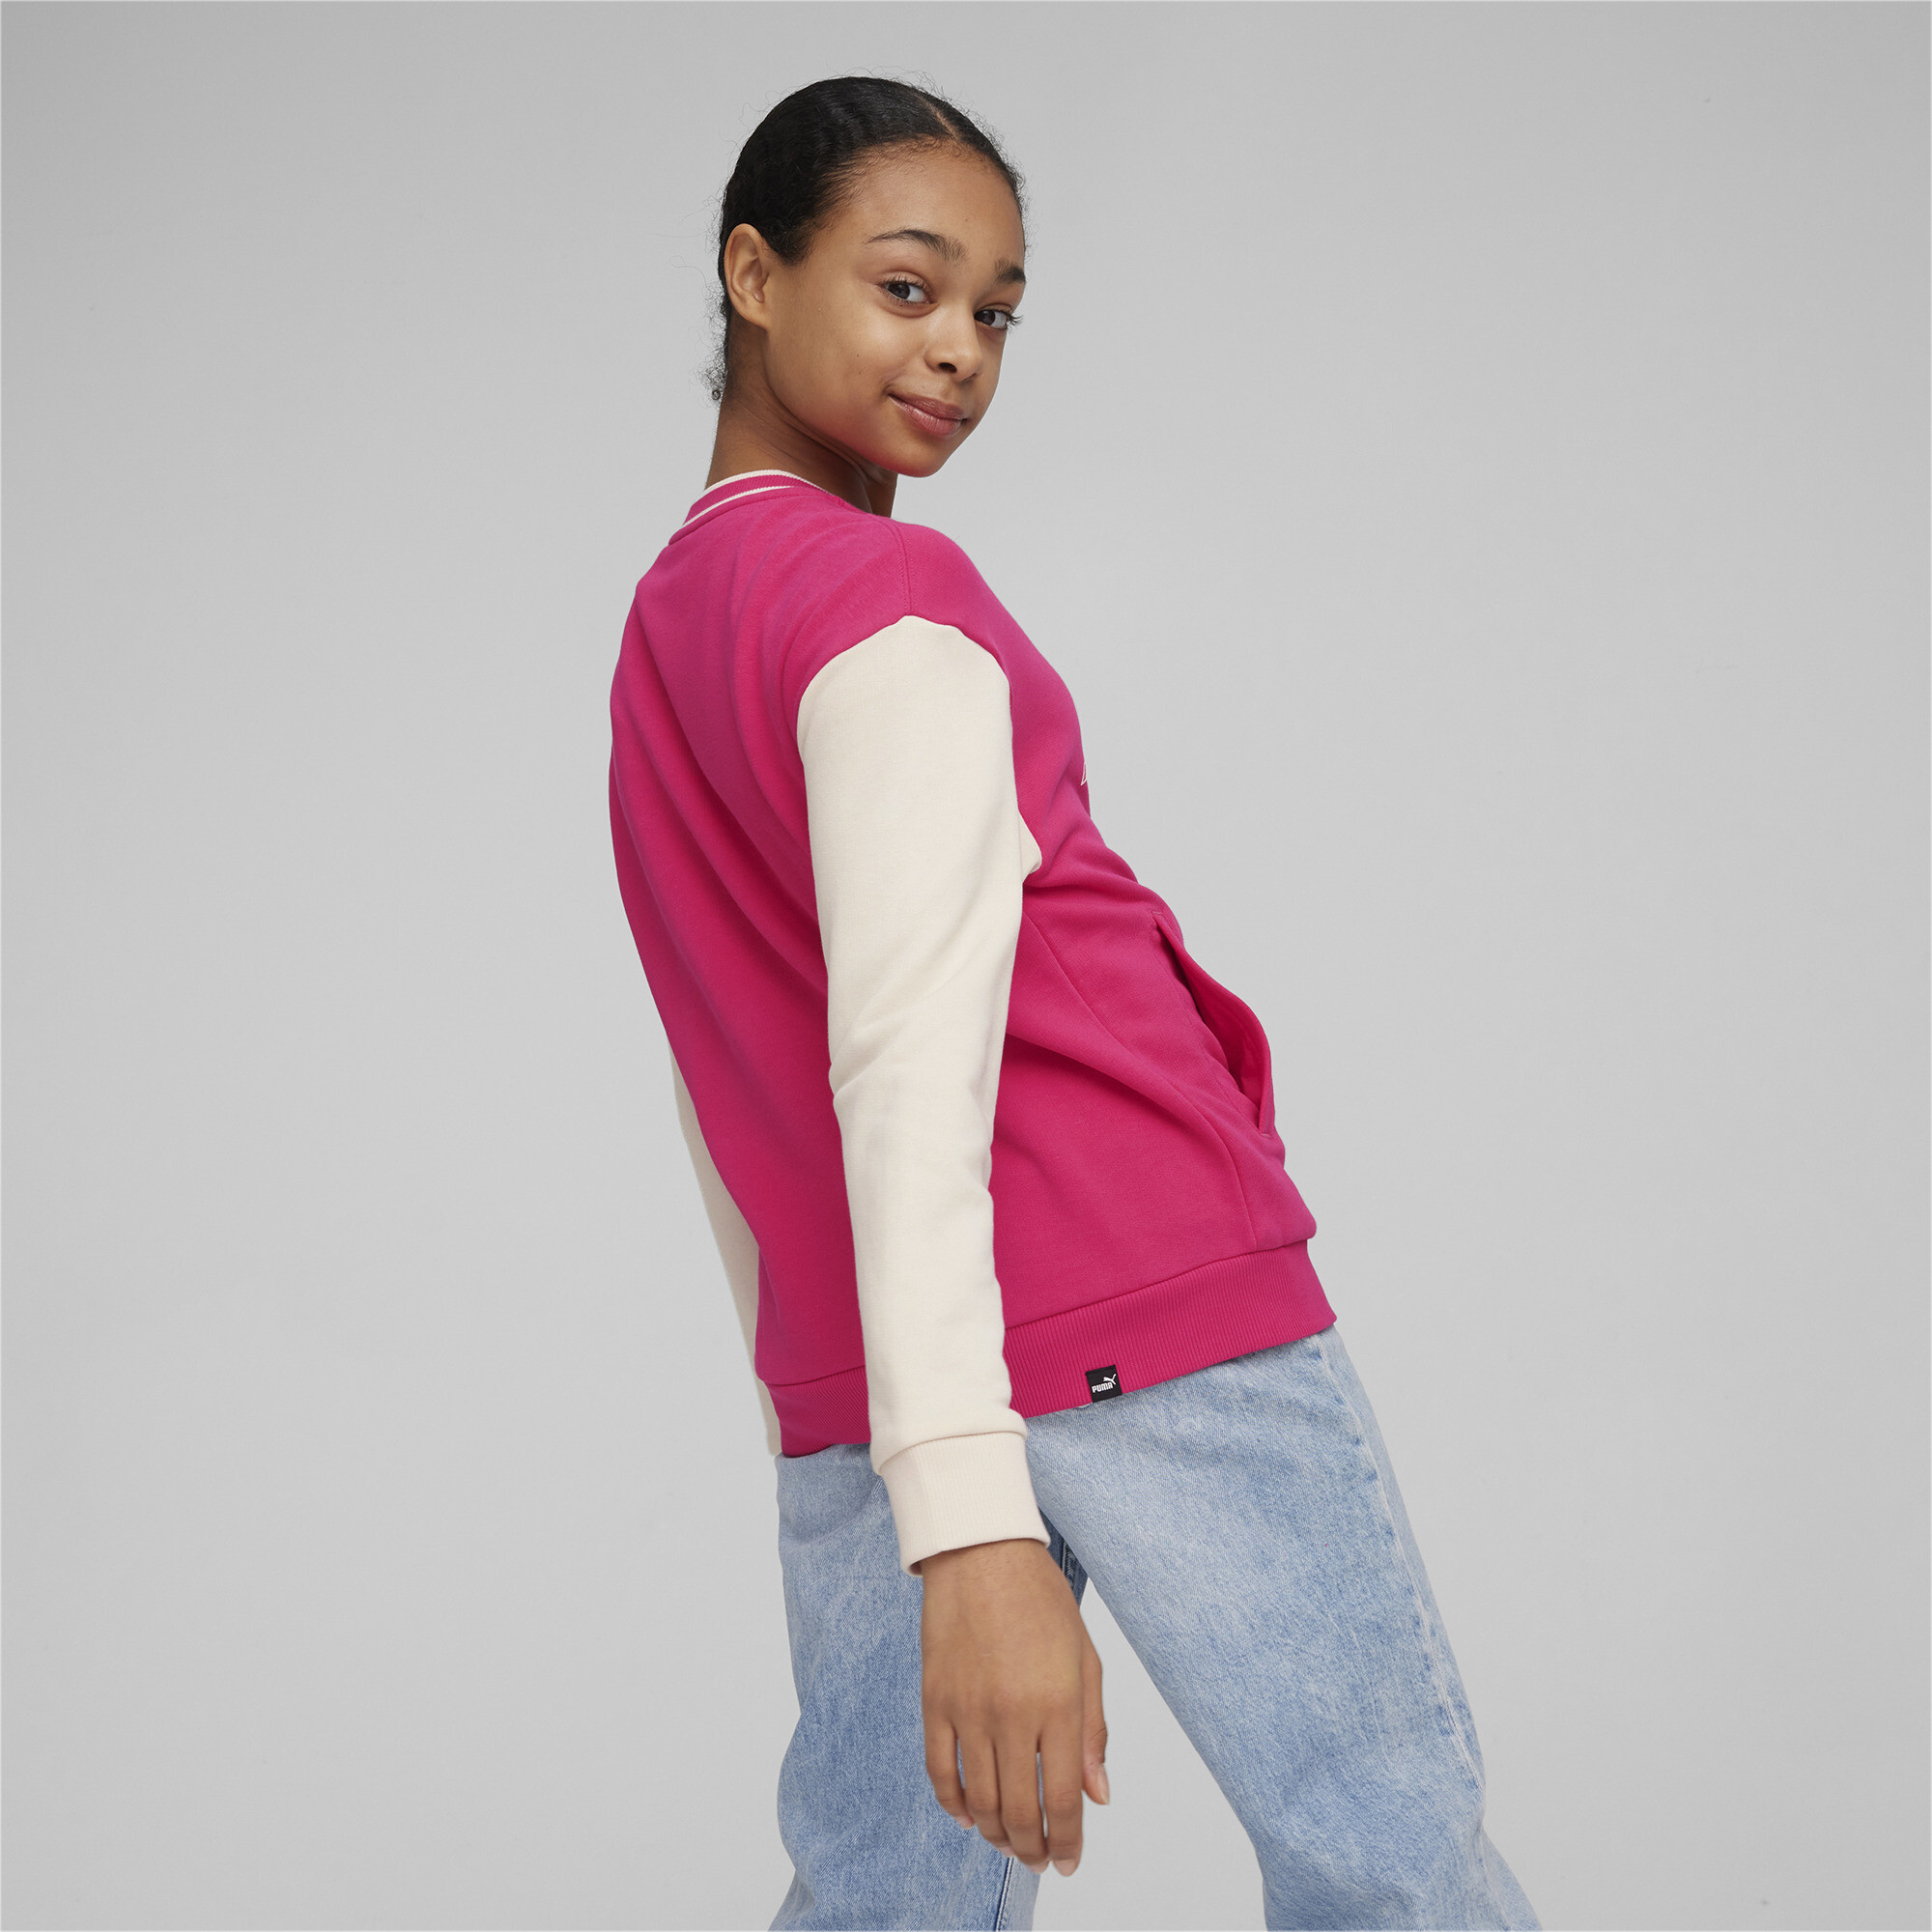 Women's Puma SQUAD Youth Jacket, Pink, Size 11-12Y, Clothing